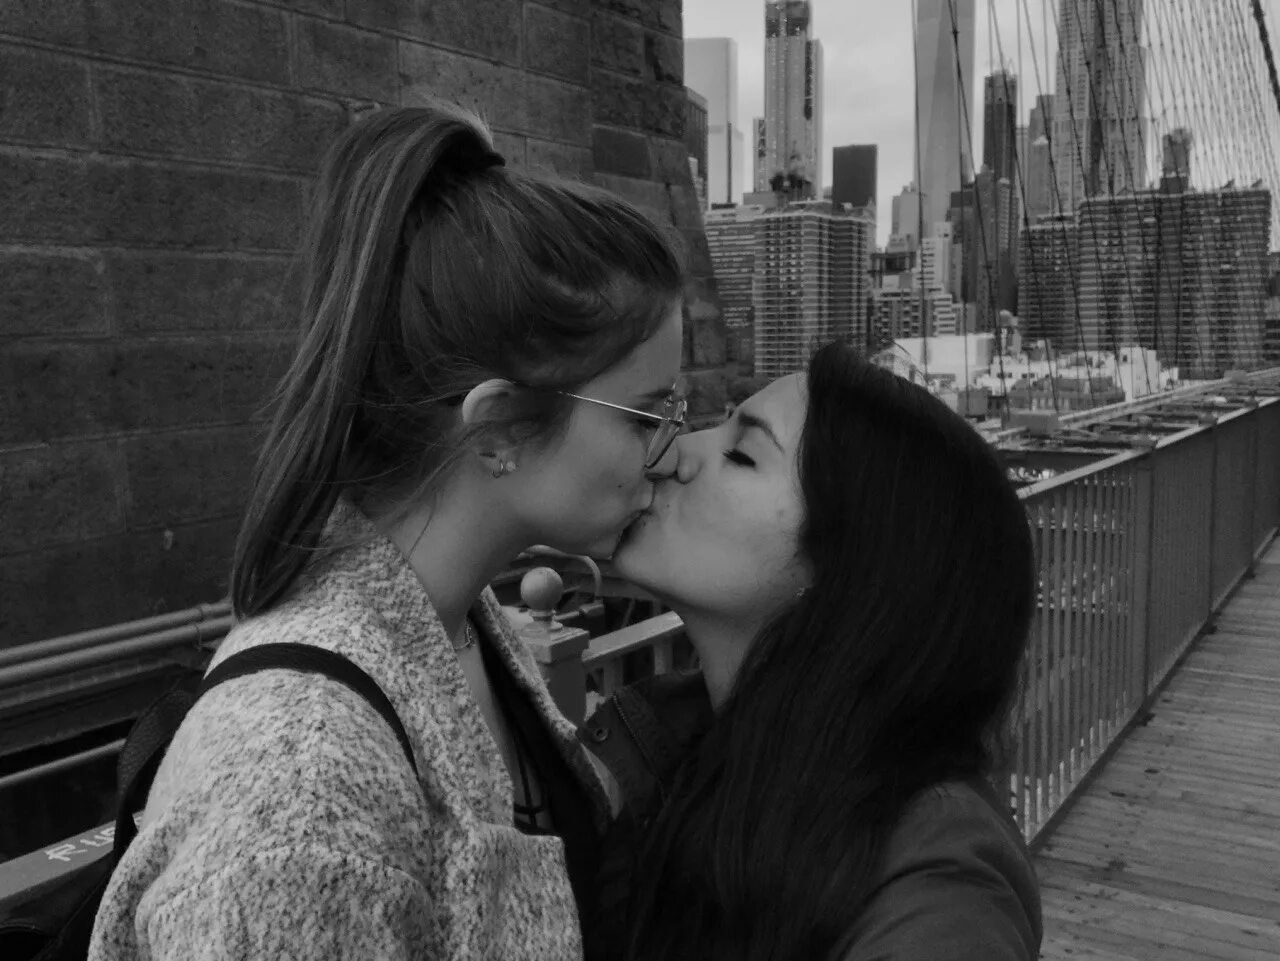 Lesbian spaces. Поцелуй девушек. Девушки целуются. Поцелуй девушки с девушкой. Поцелуй двух девушек.